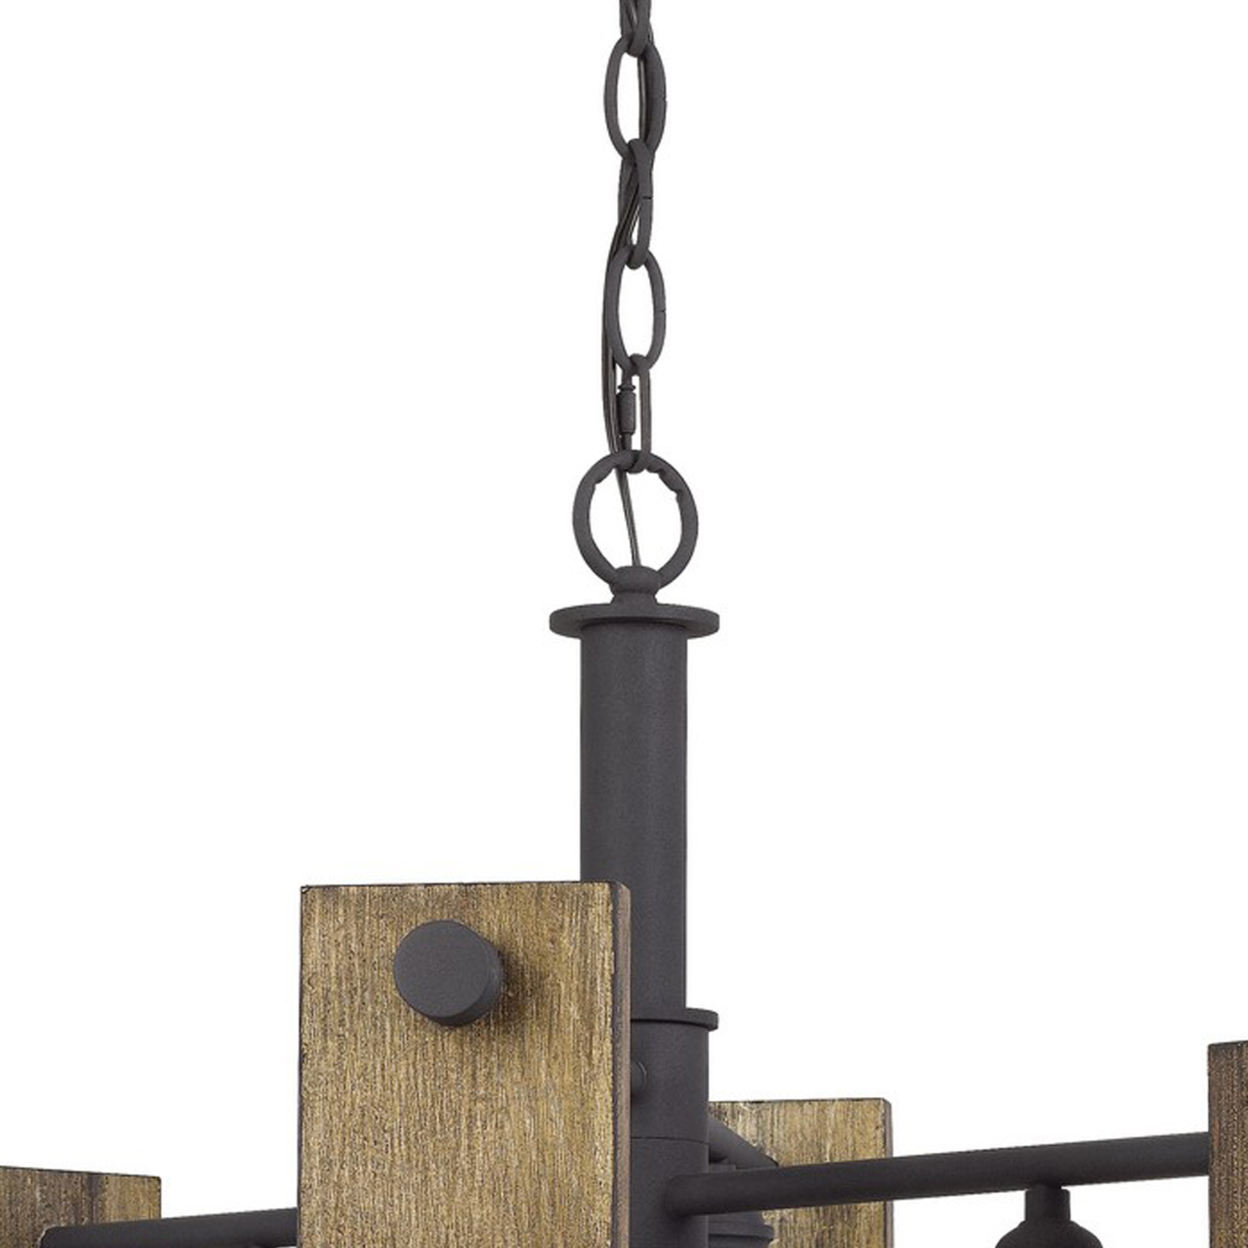 Gyroscopic Design Wooden Chandelier With Metal Support, Brown- Saltoro Sherpi